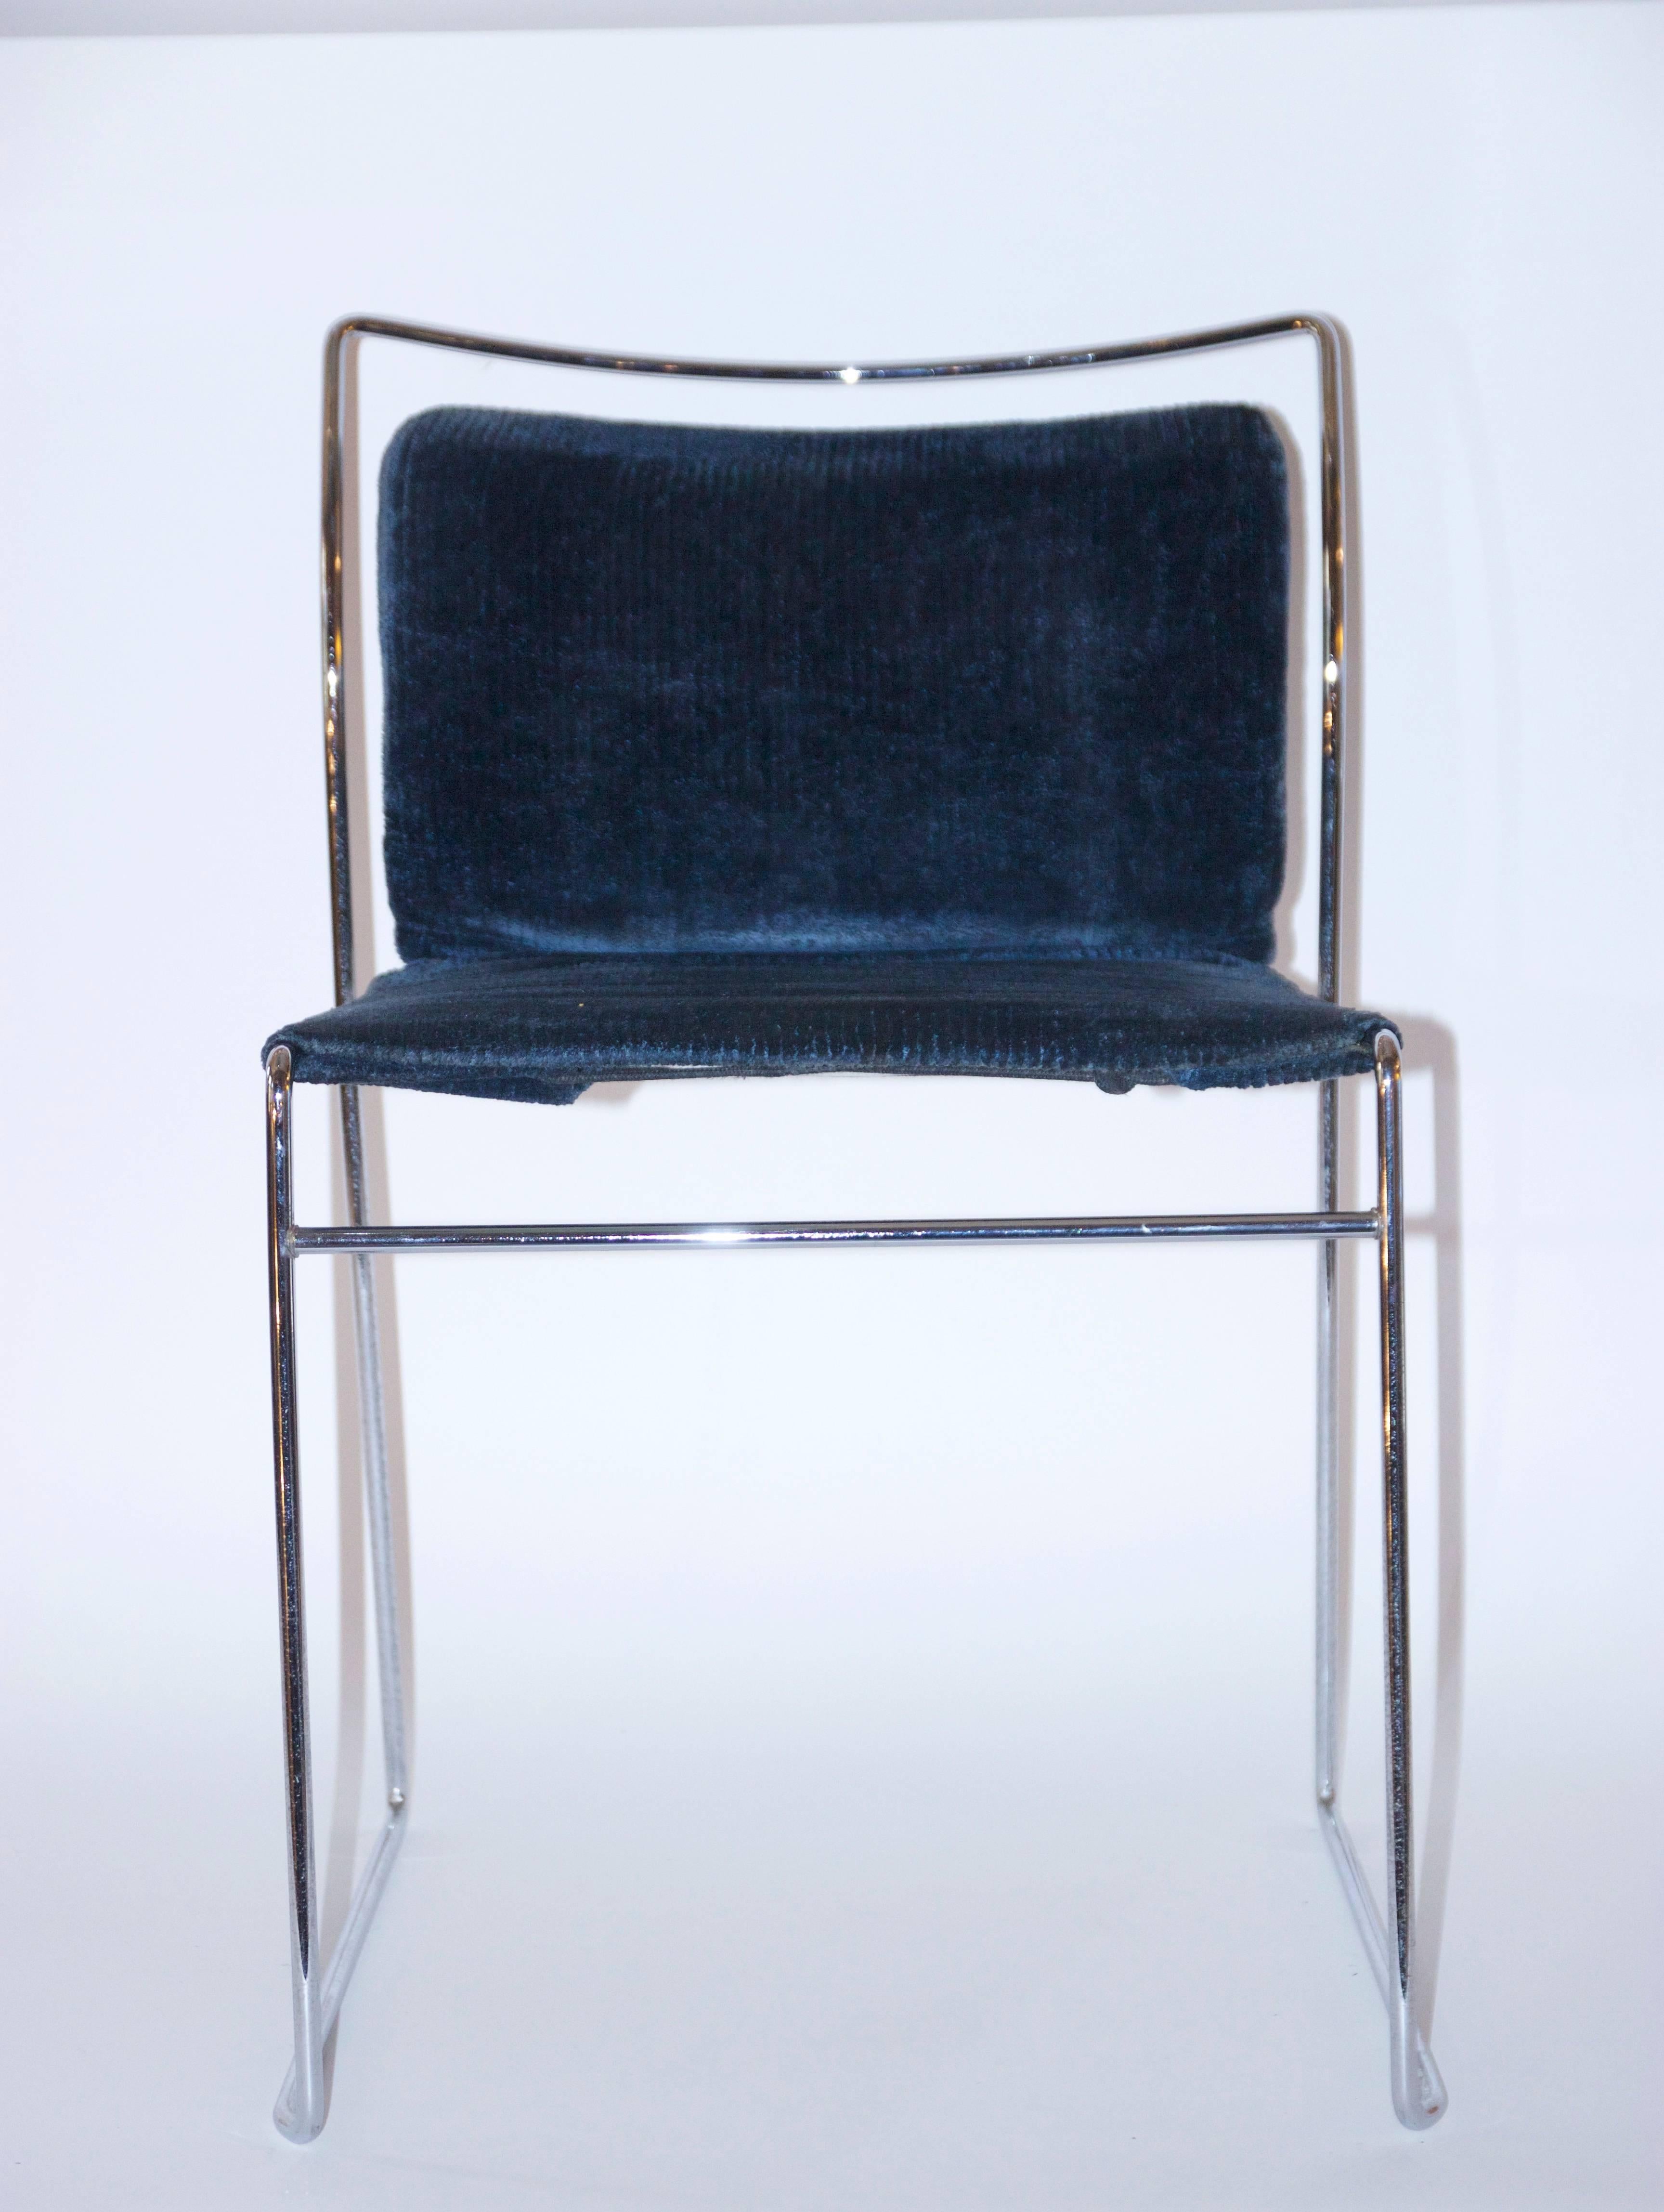 Takahama Kazuhide,
set of four chairs,
Tulu model,
Simon Gavina edition,
metal and textile of origin,
circa 1969, Italy.
Measures: Height 71 cm, sitting height 45 cm, width 48 cm, depth 42 cm.